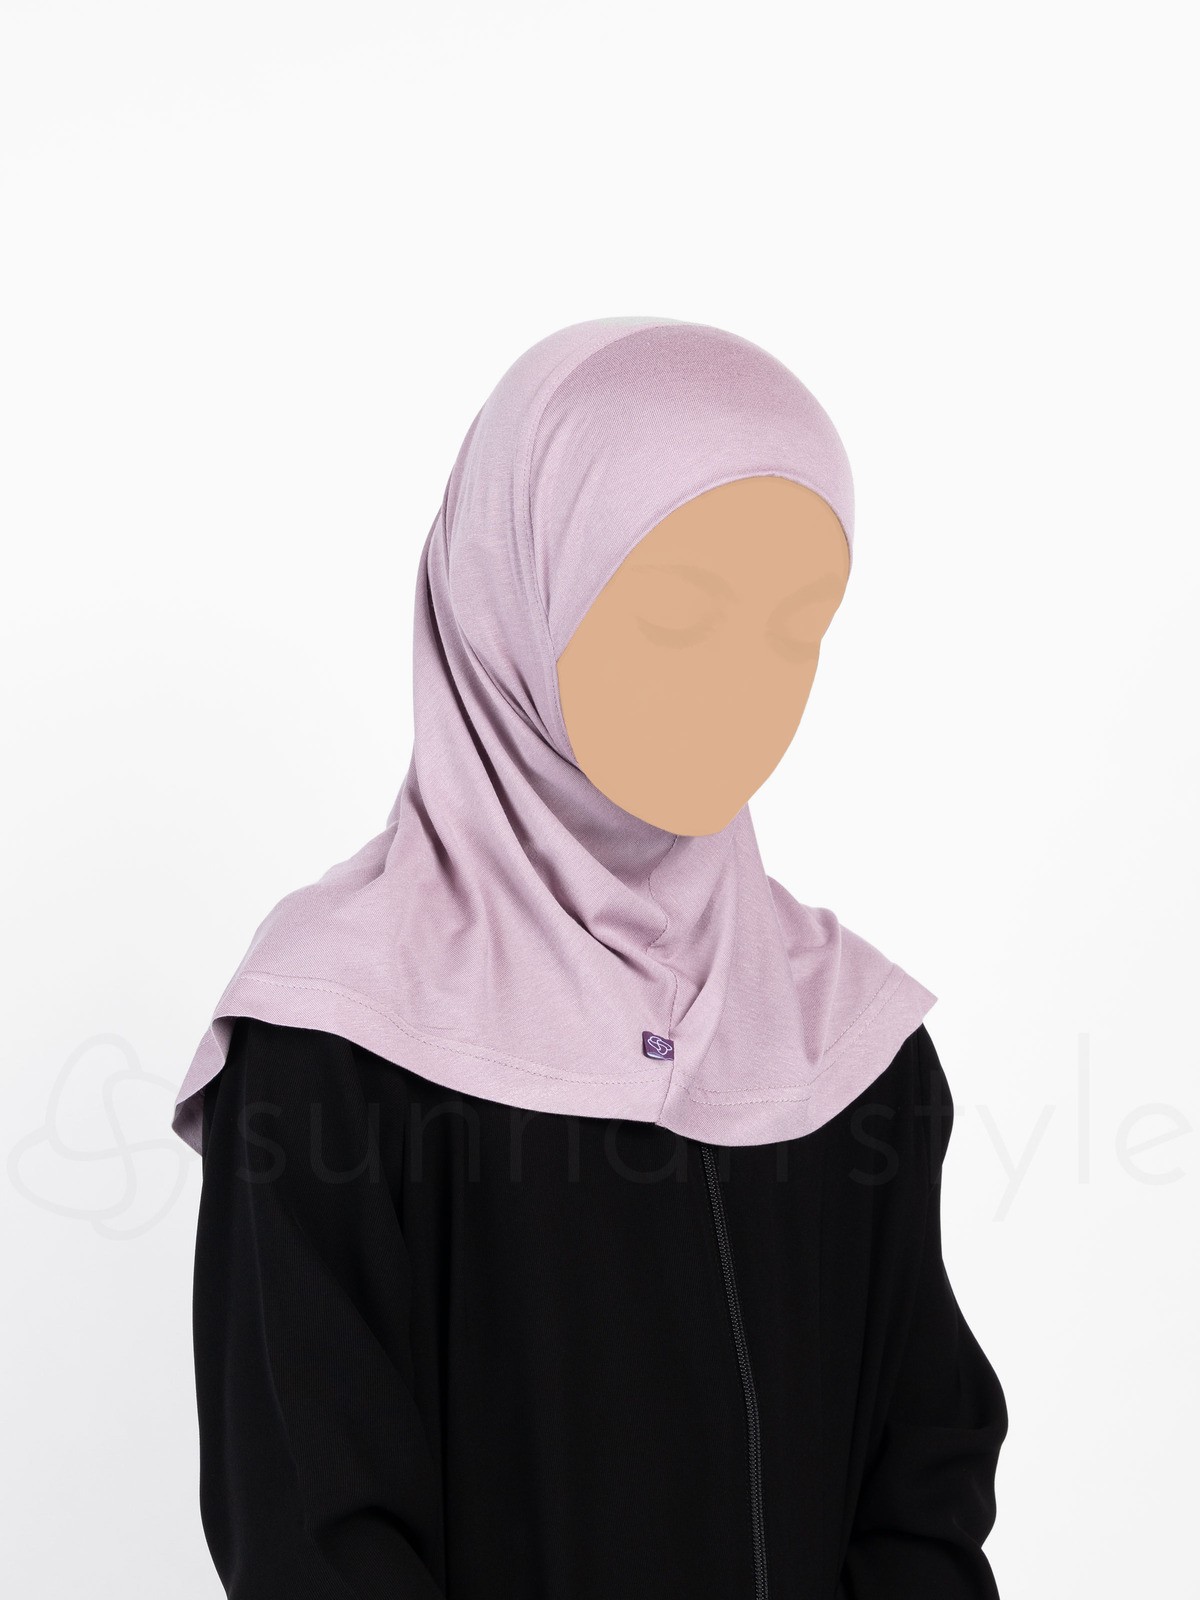 Sunnah Style - Girls Urban Hijab (Dusty Mauve)